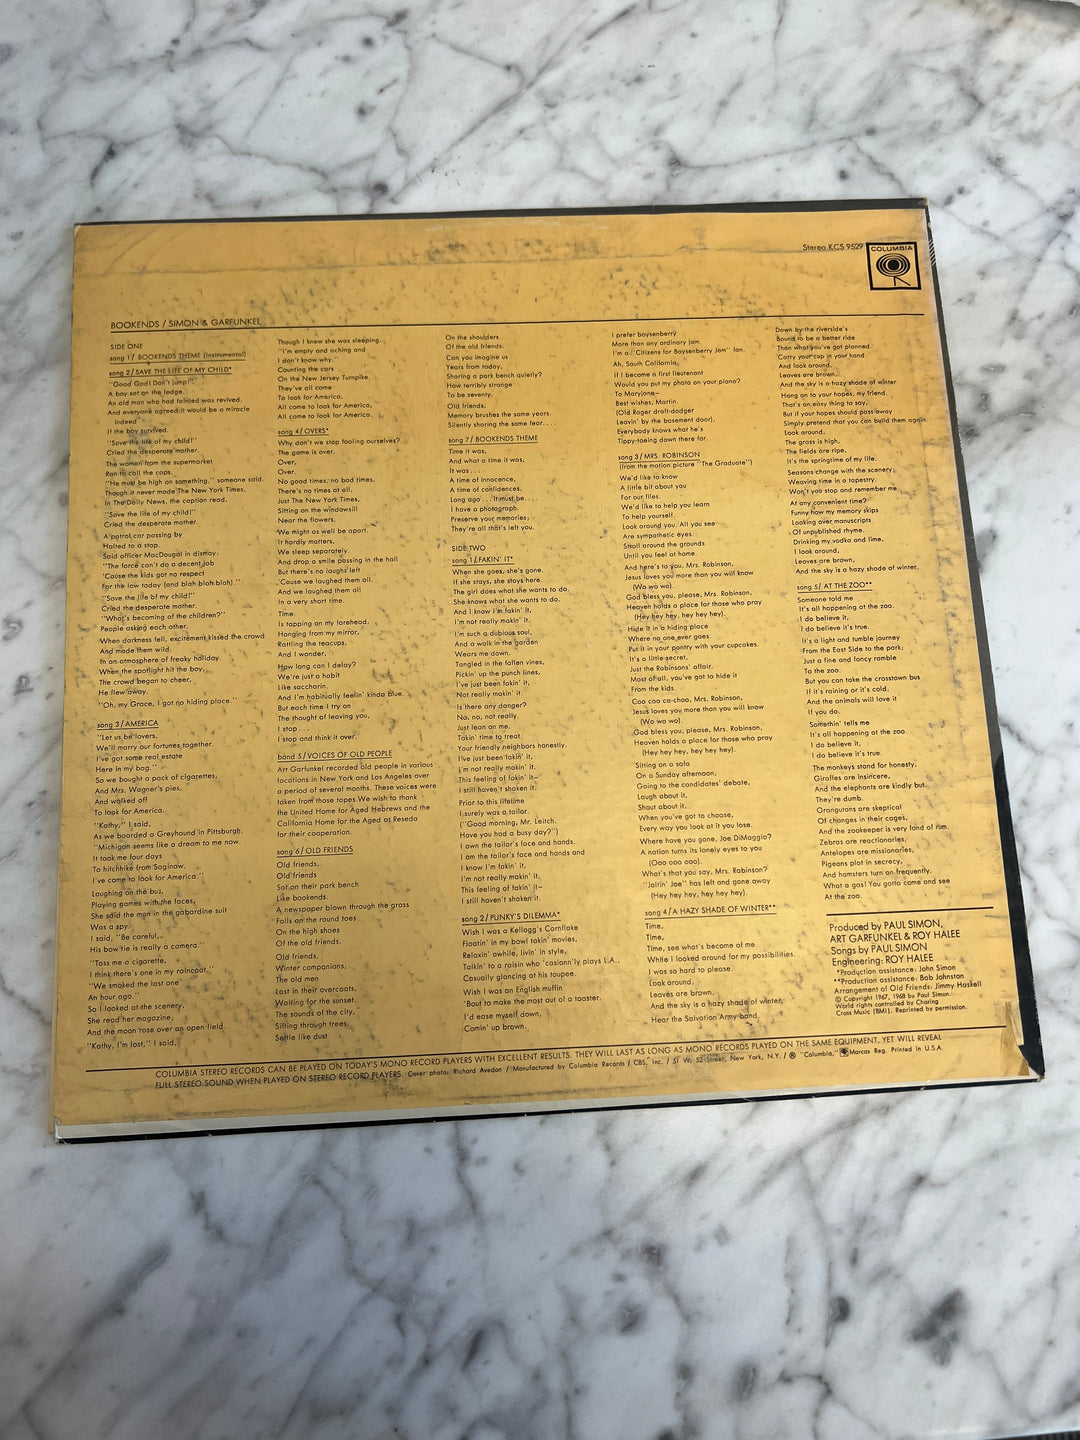 Simon and Garfunkel - Bookends Vinyl Record KCS9529